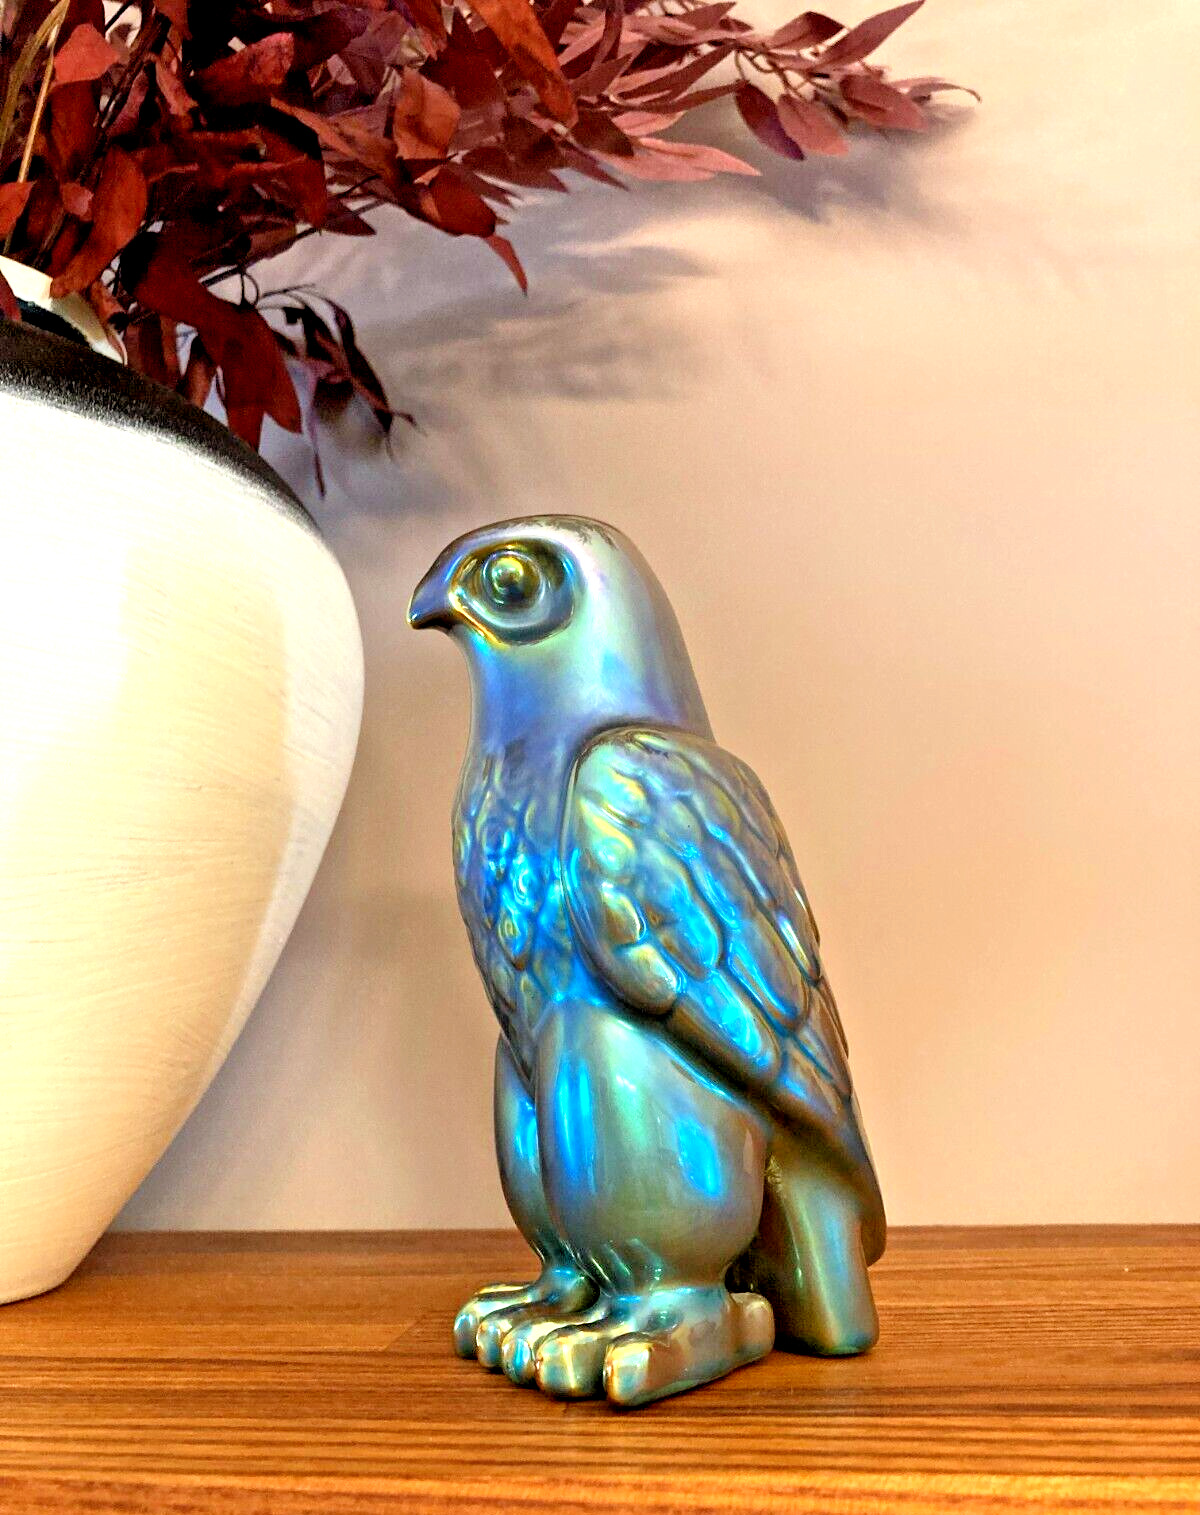 Zsolnay Eosin Falcon Figurine - Rare, Beautiful Iridescent Blue Hues